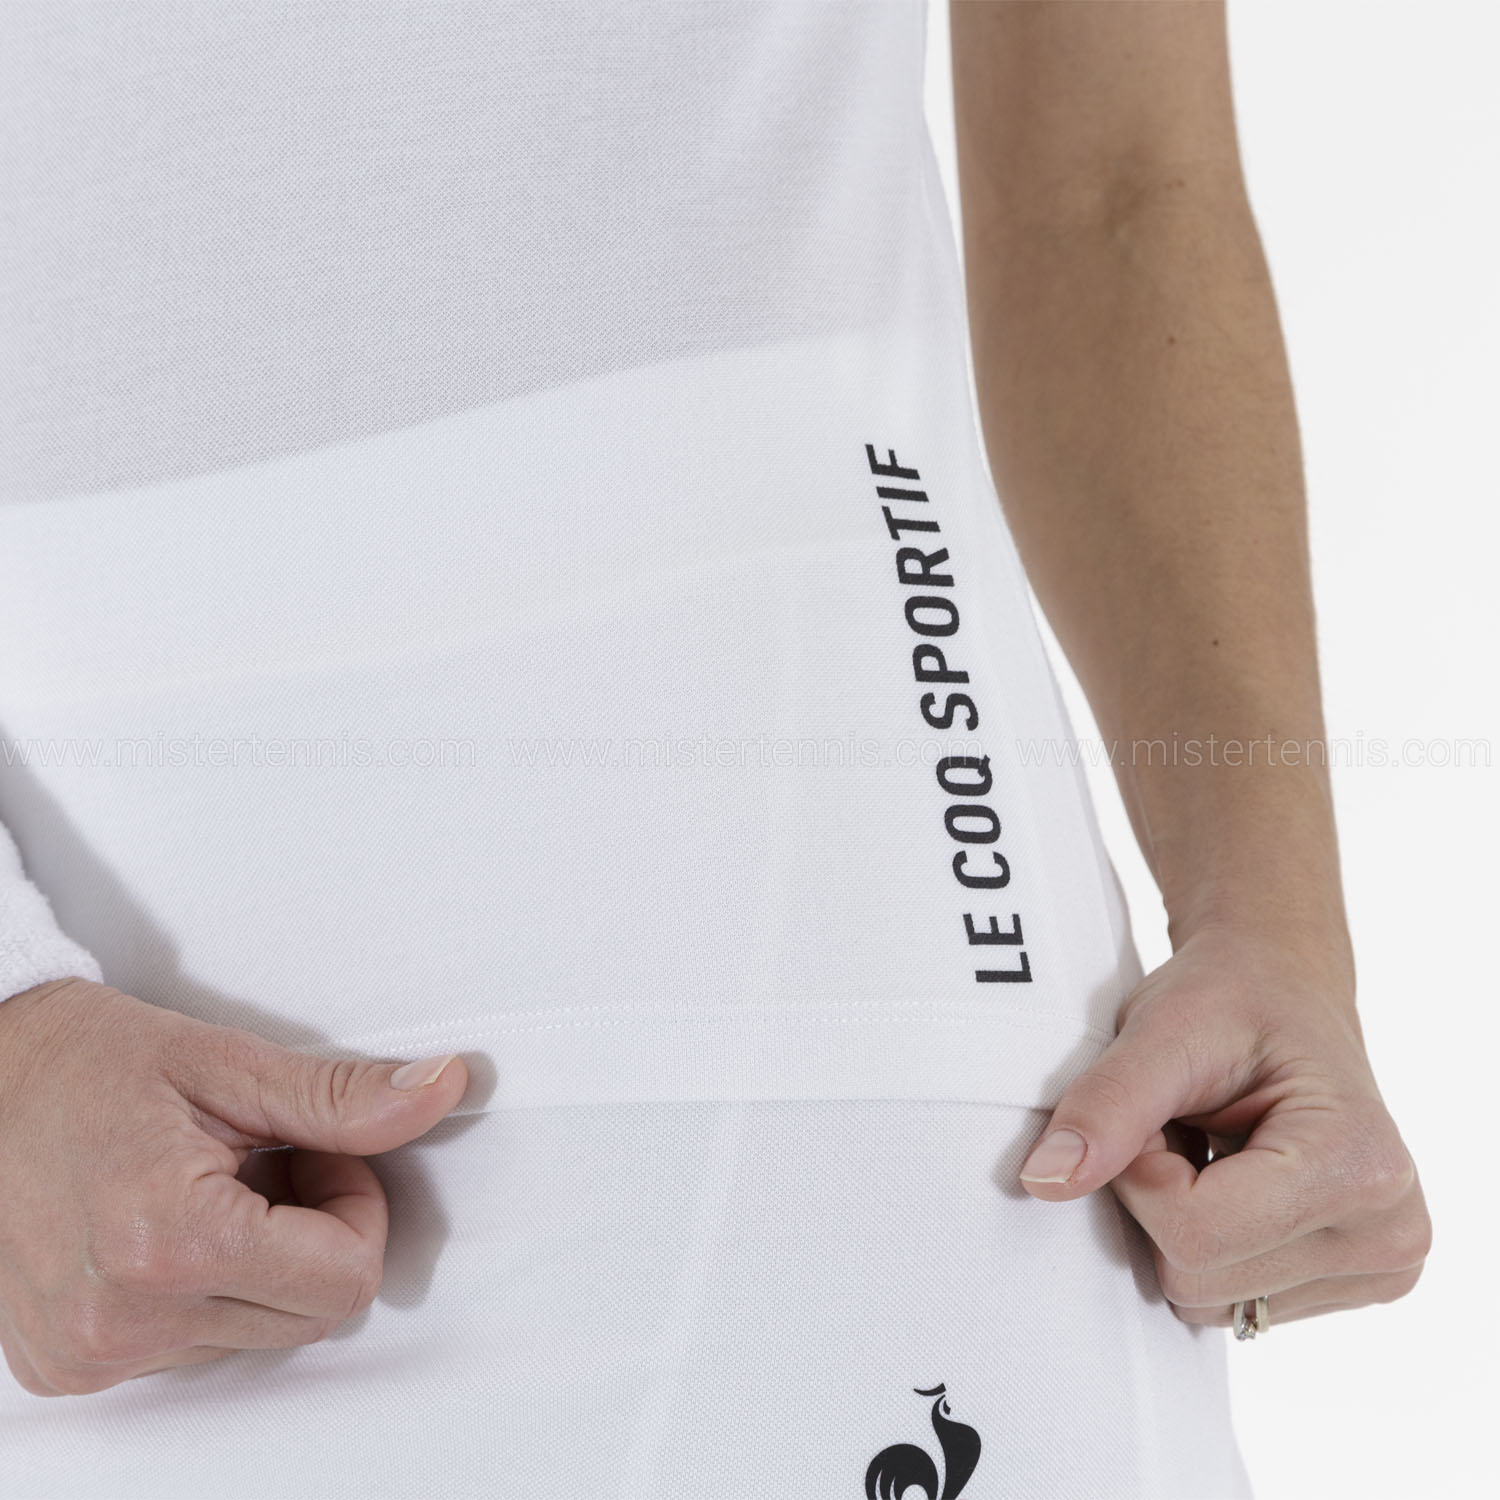 Le Coq Sportif Match T-Shirt - New Optical White